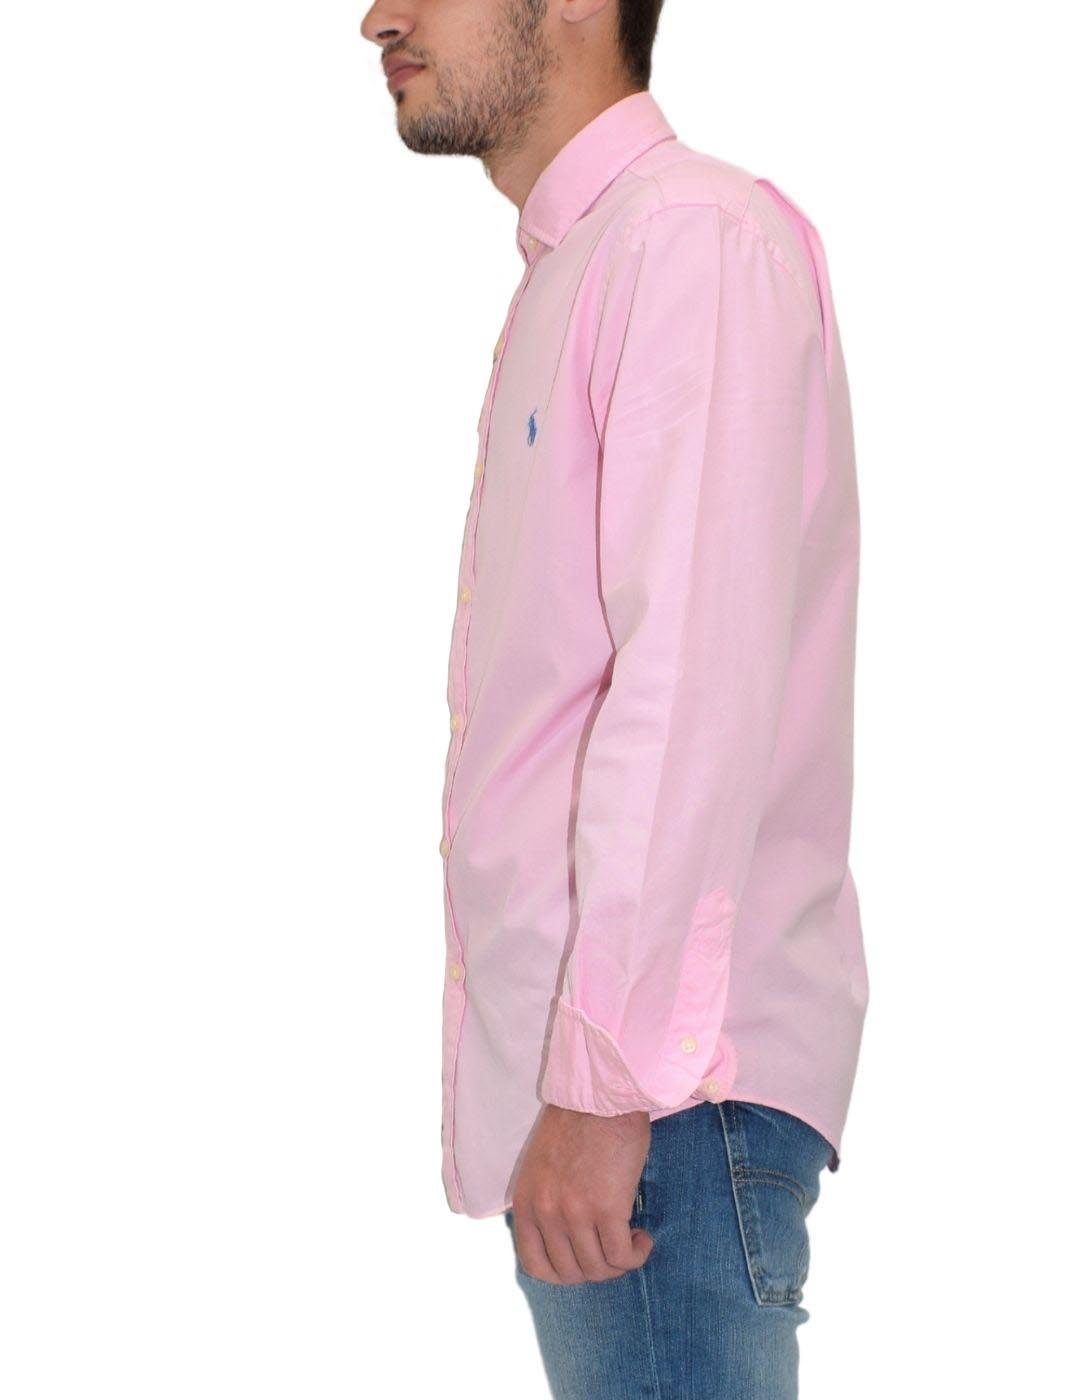 Camisa Polo Ralph Lauren de popelin rosa de hombre slim fit